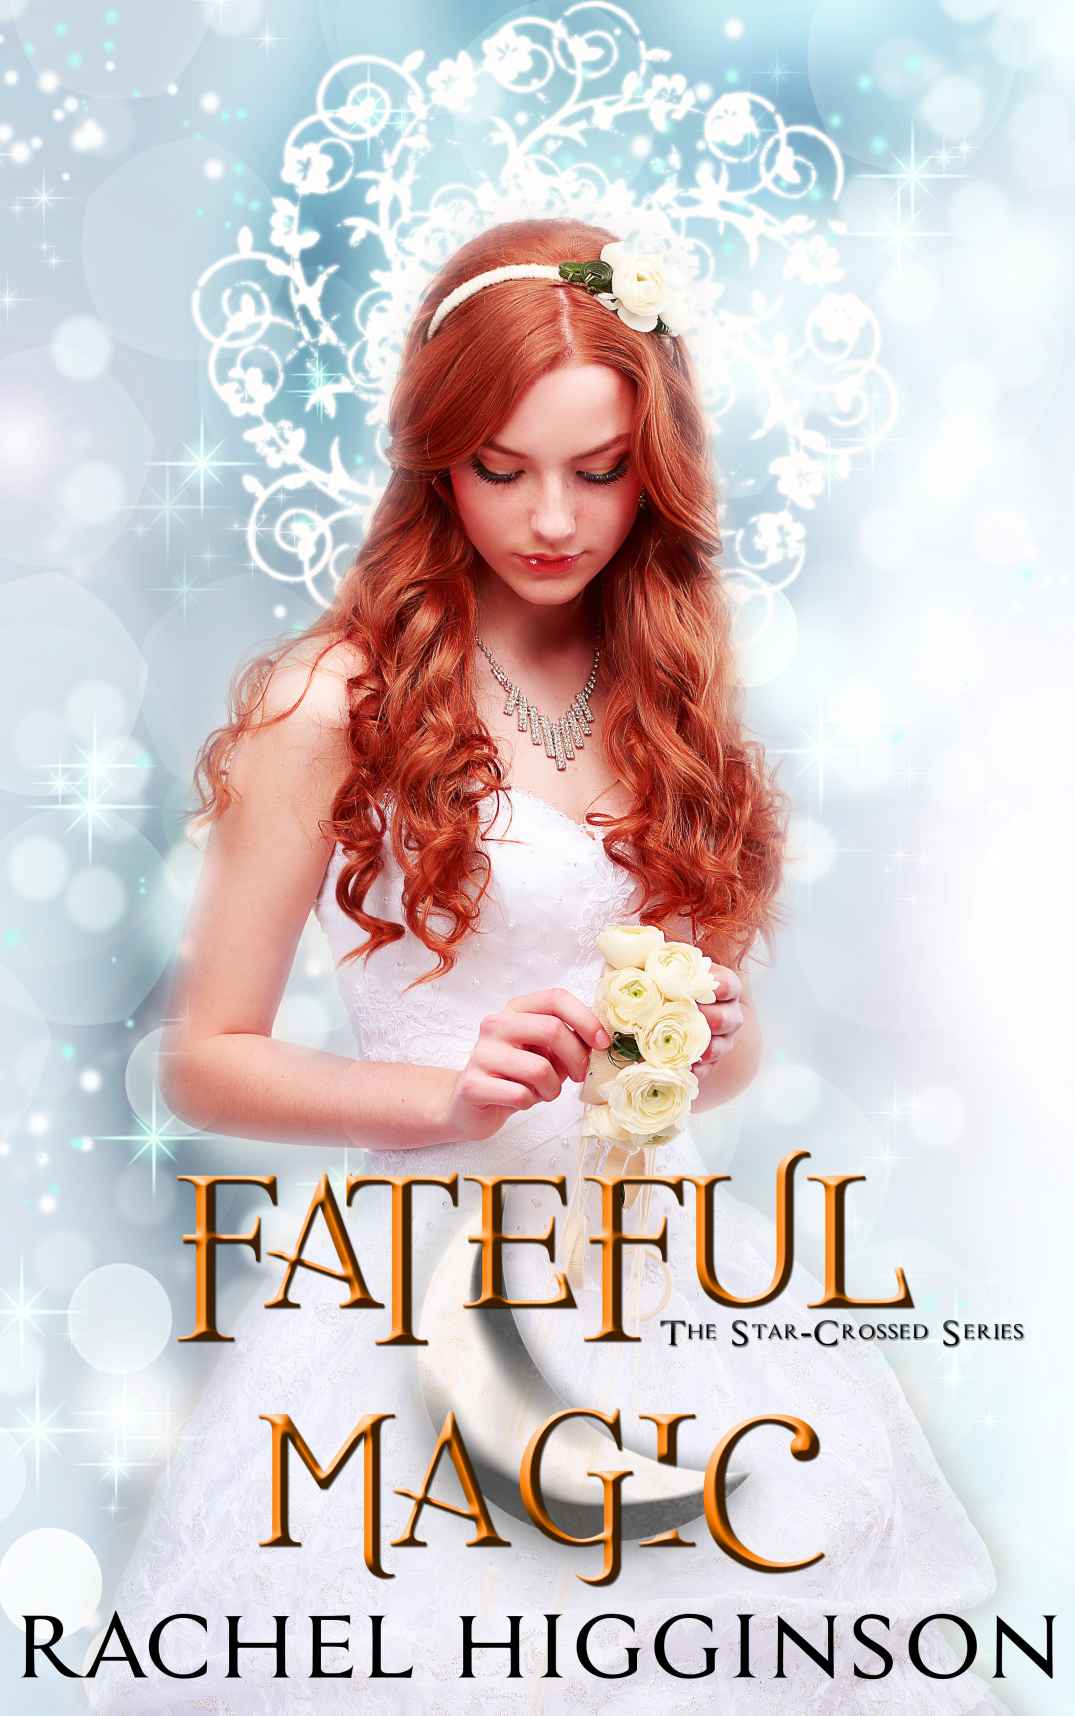 Fateful Magic (The Star-Crossed Series Book 8) by Rachel Higginson